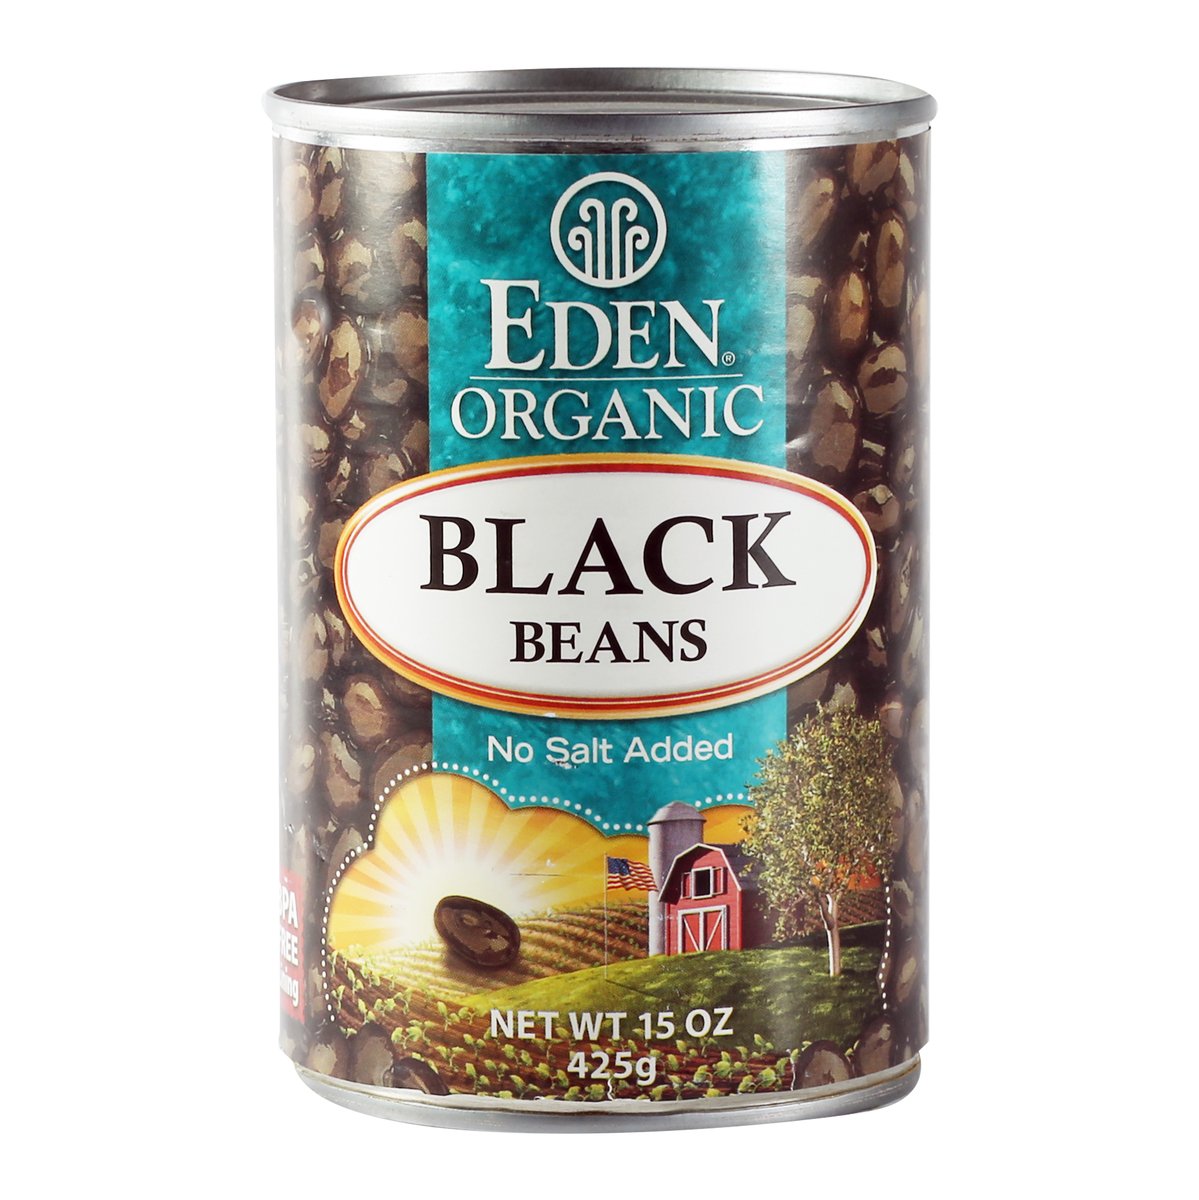 Eden Organic Black Beans No Salt Added 425 g